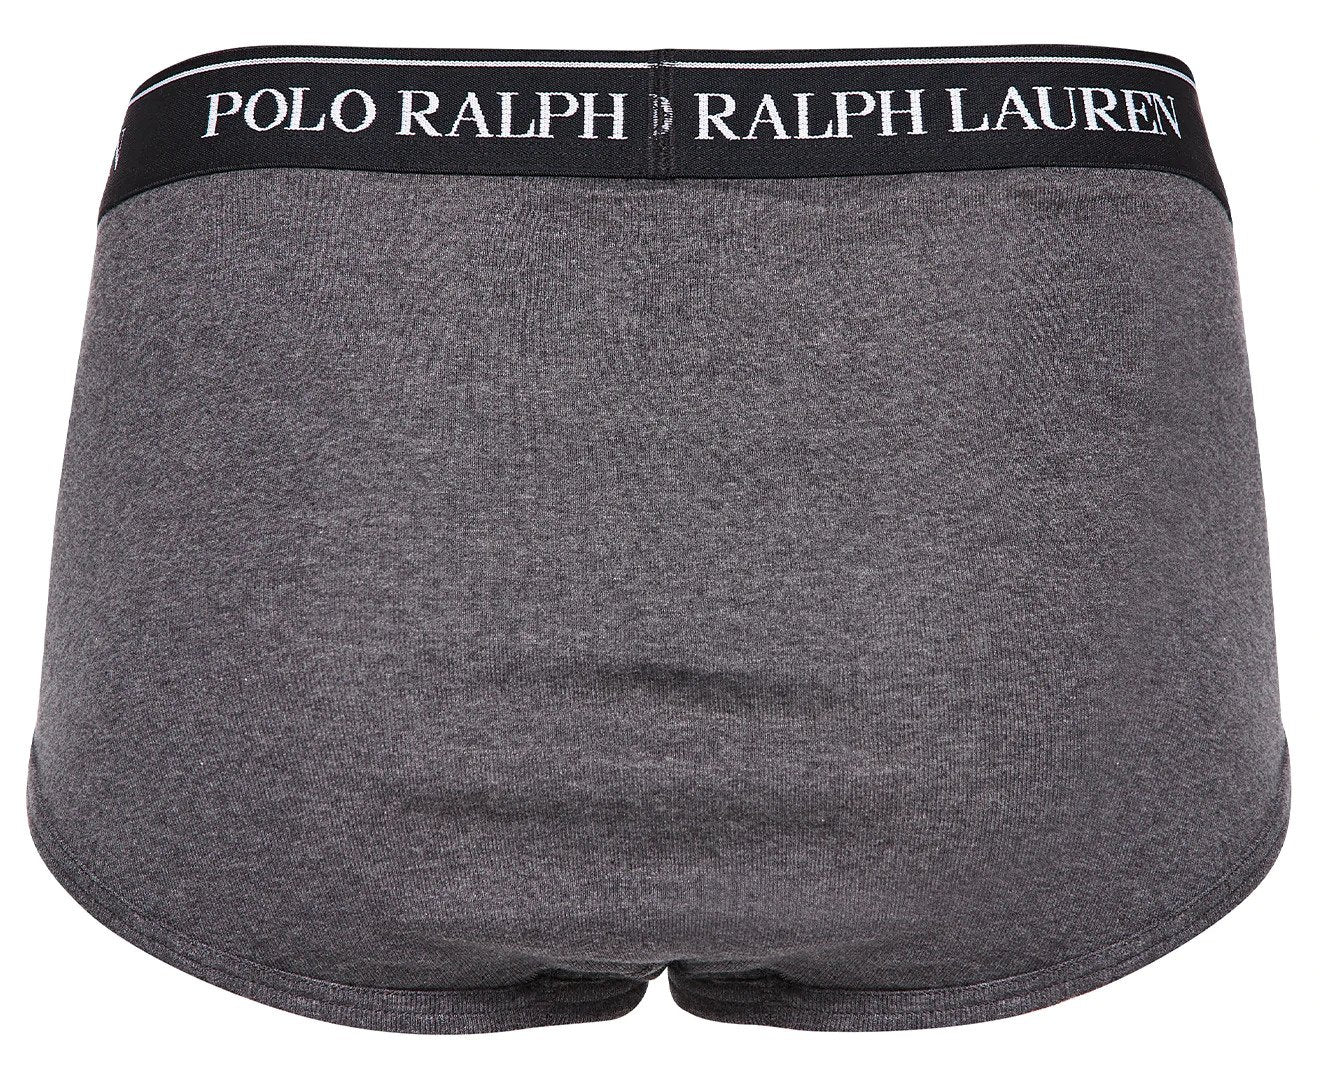 Polo Ralph Lauren Men's Mid-Rise Brief 4-Pack - Grey/Black